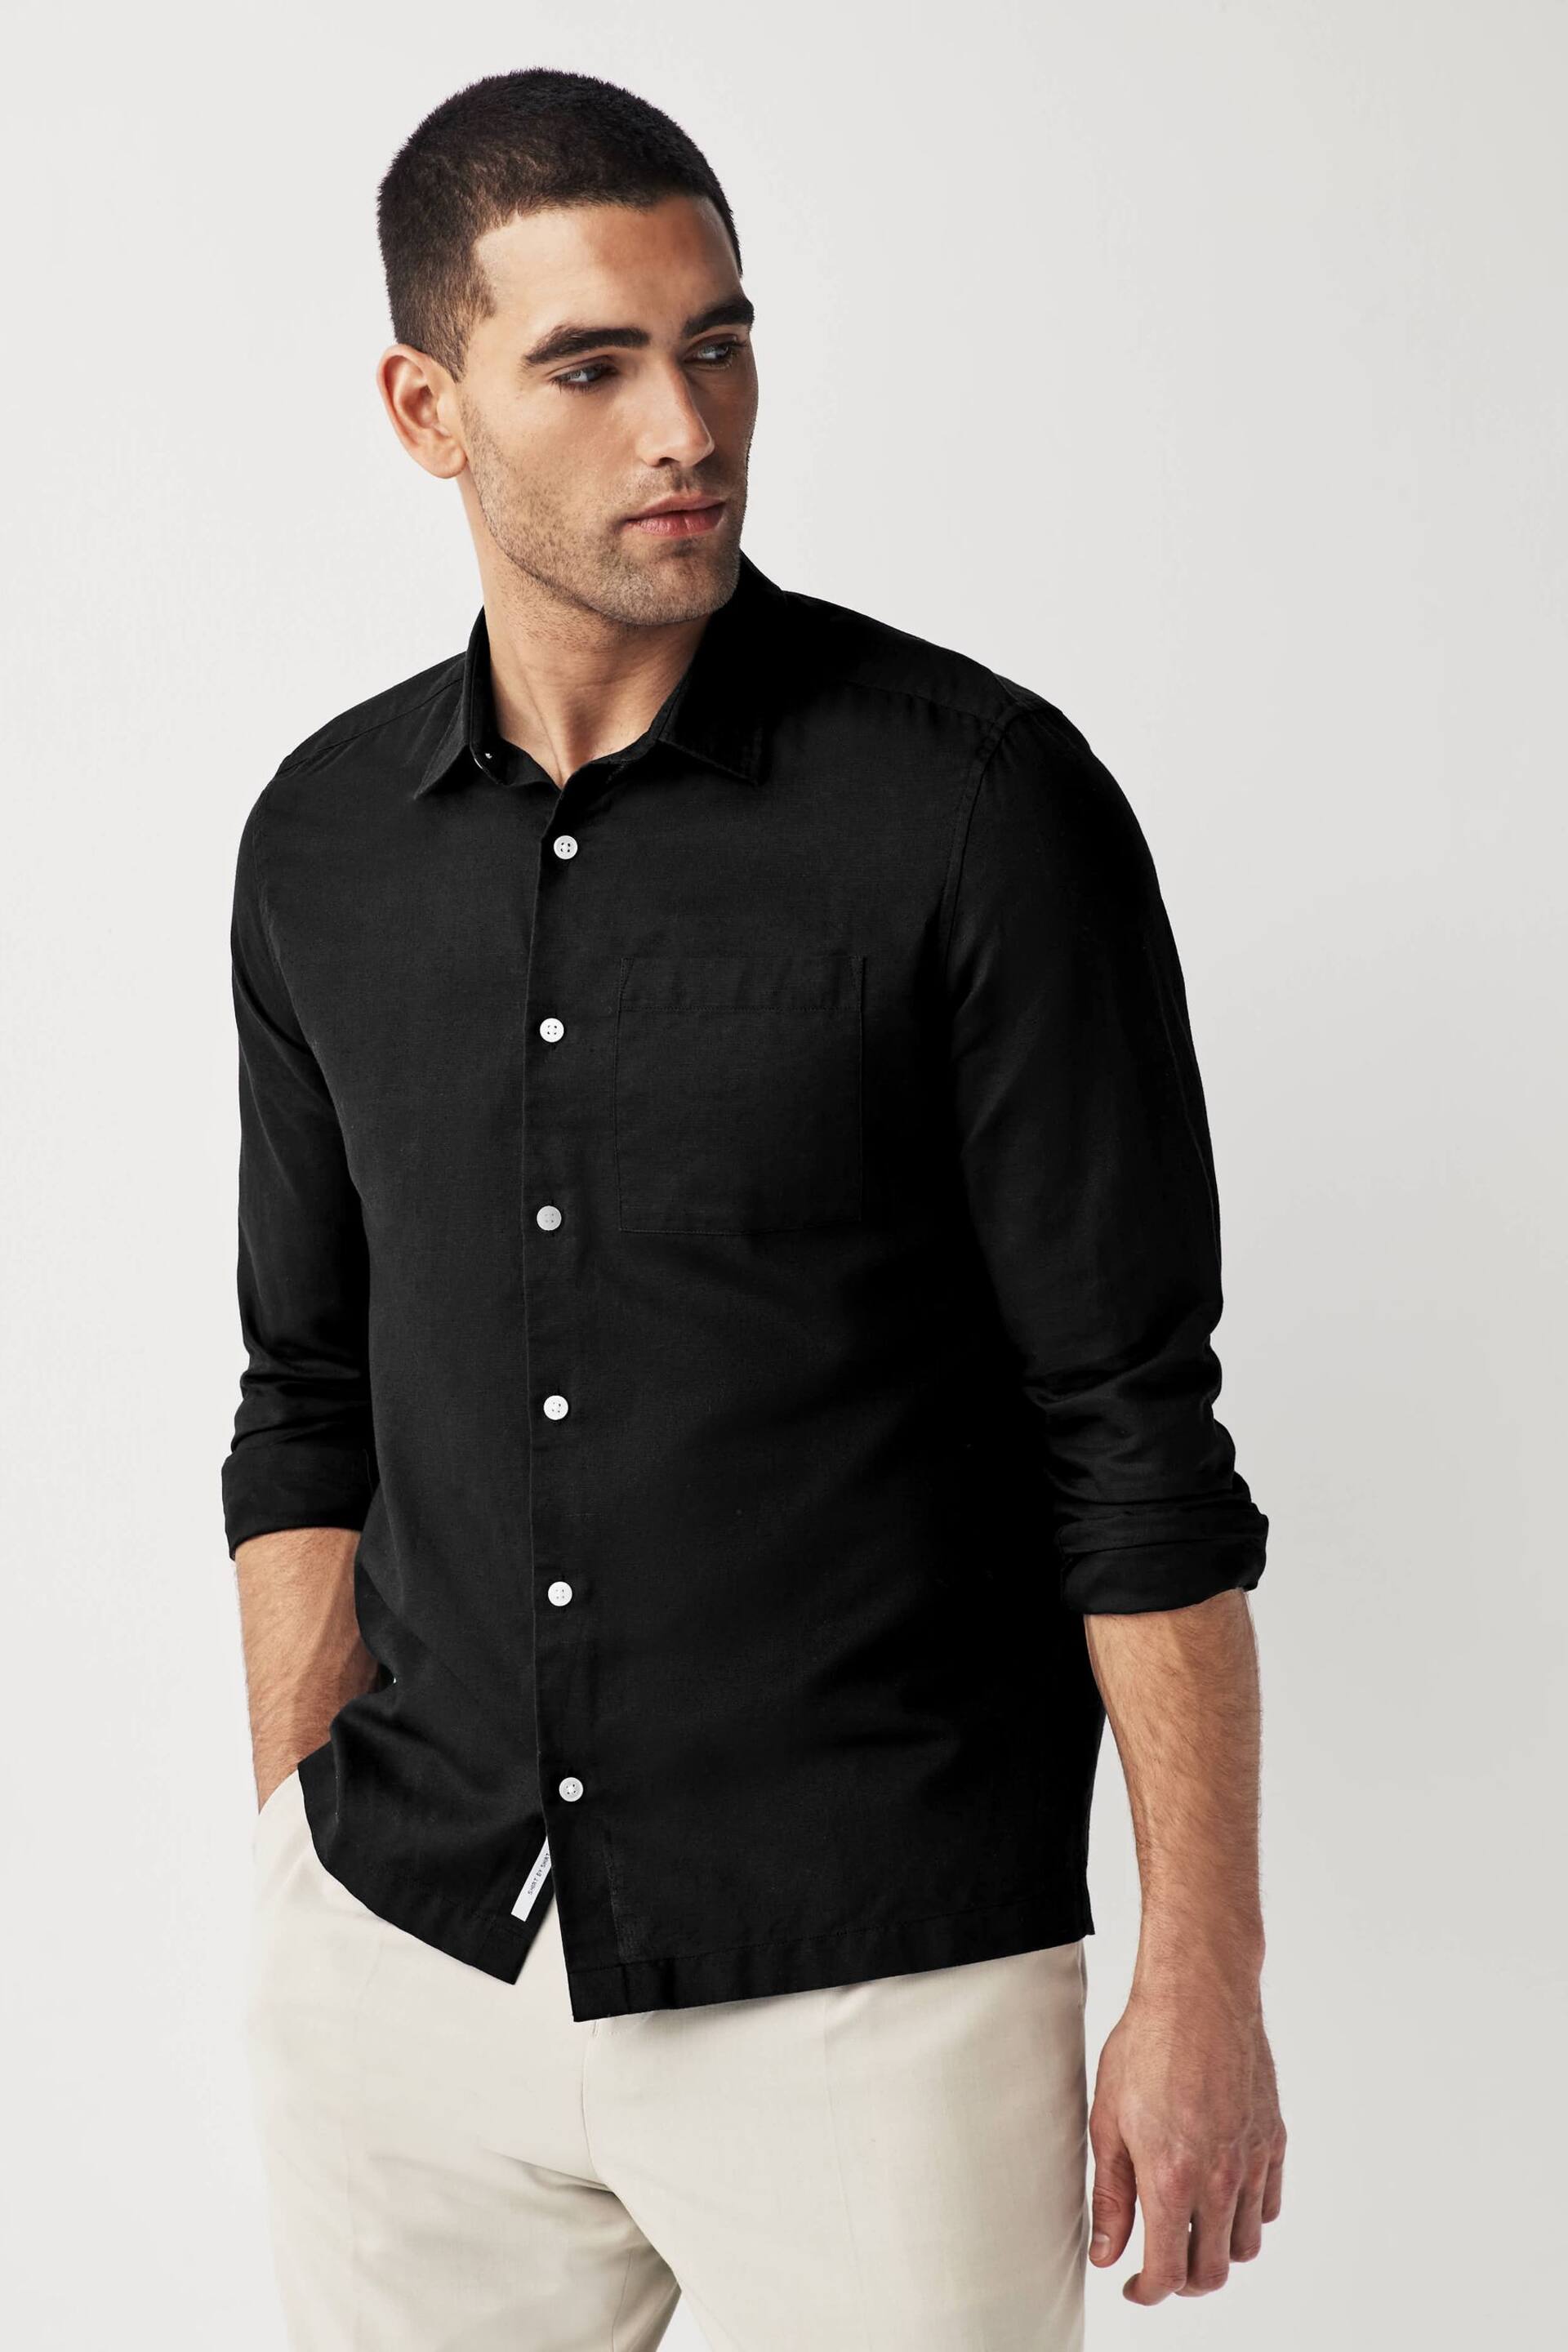 Black Linen Blend Long Sleeve Shirt - Image 1 of 7